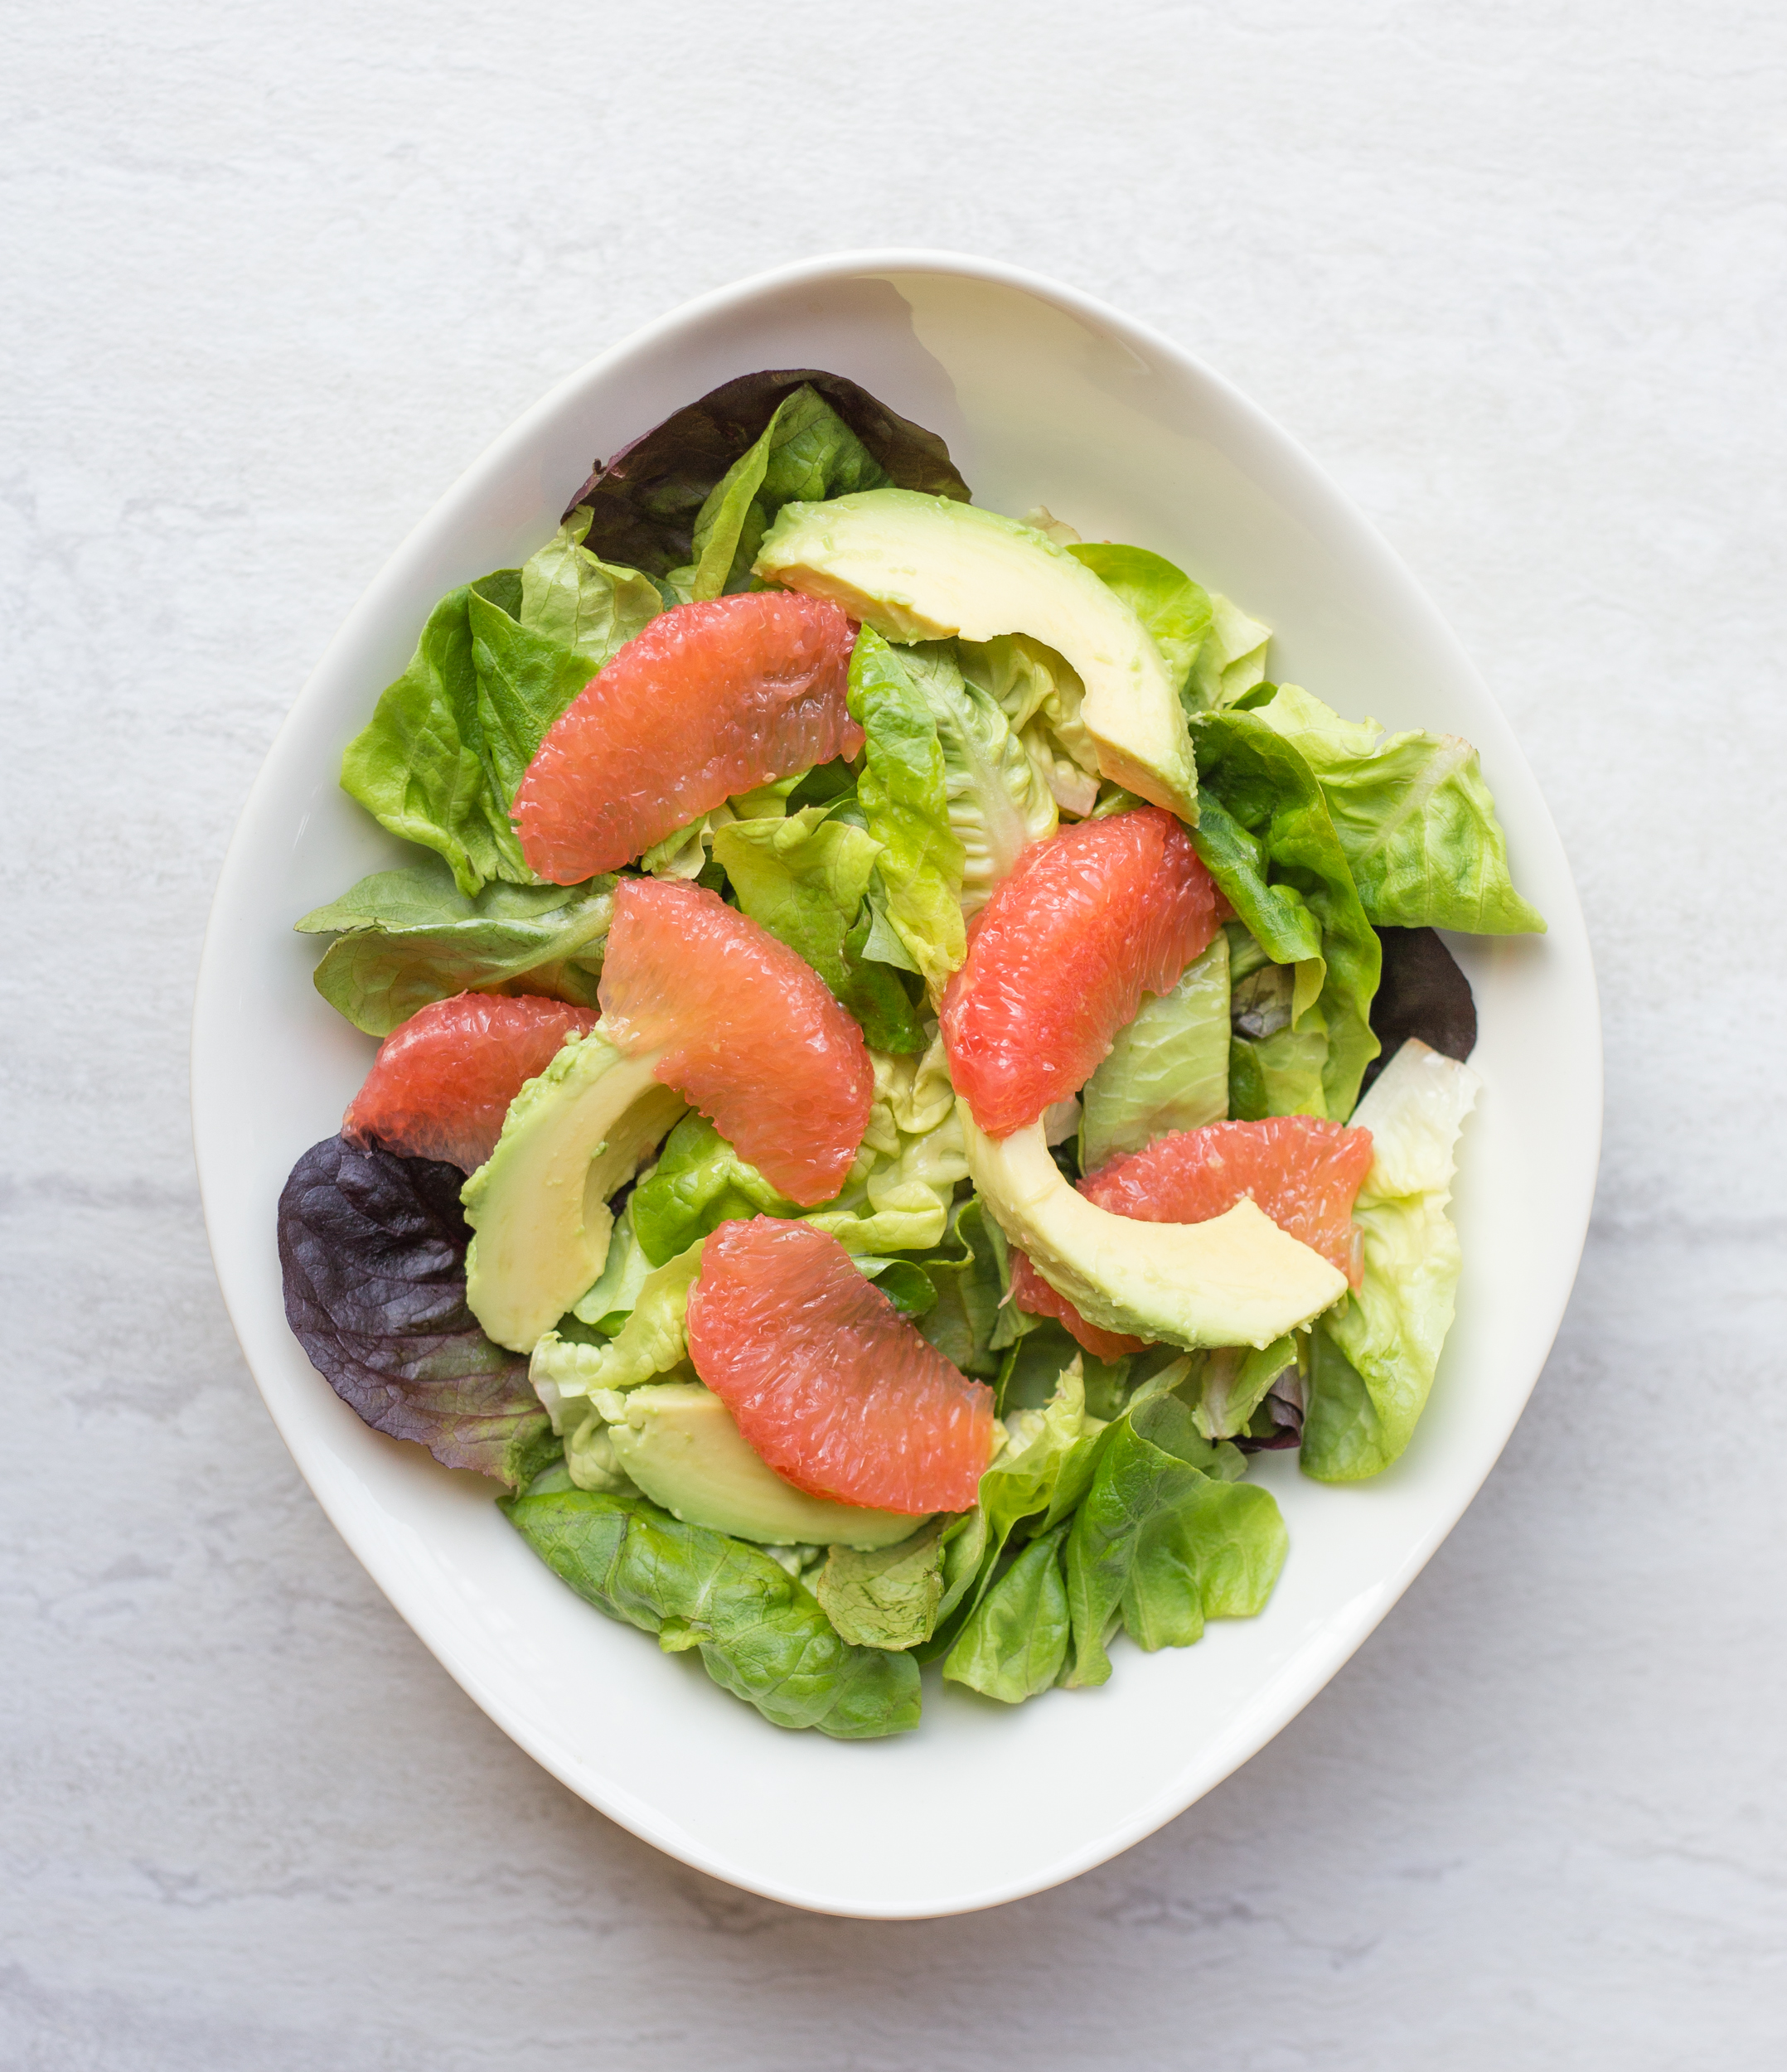 I love this recipe for Avocado Grapefruit salad. So fresh and simple!